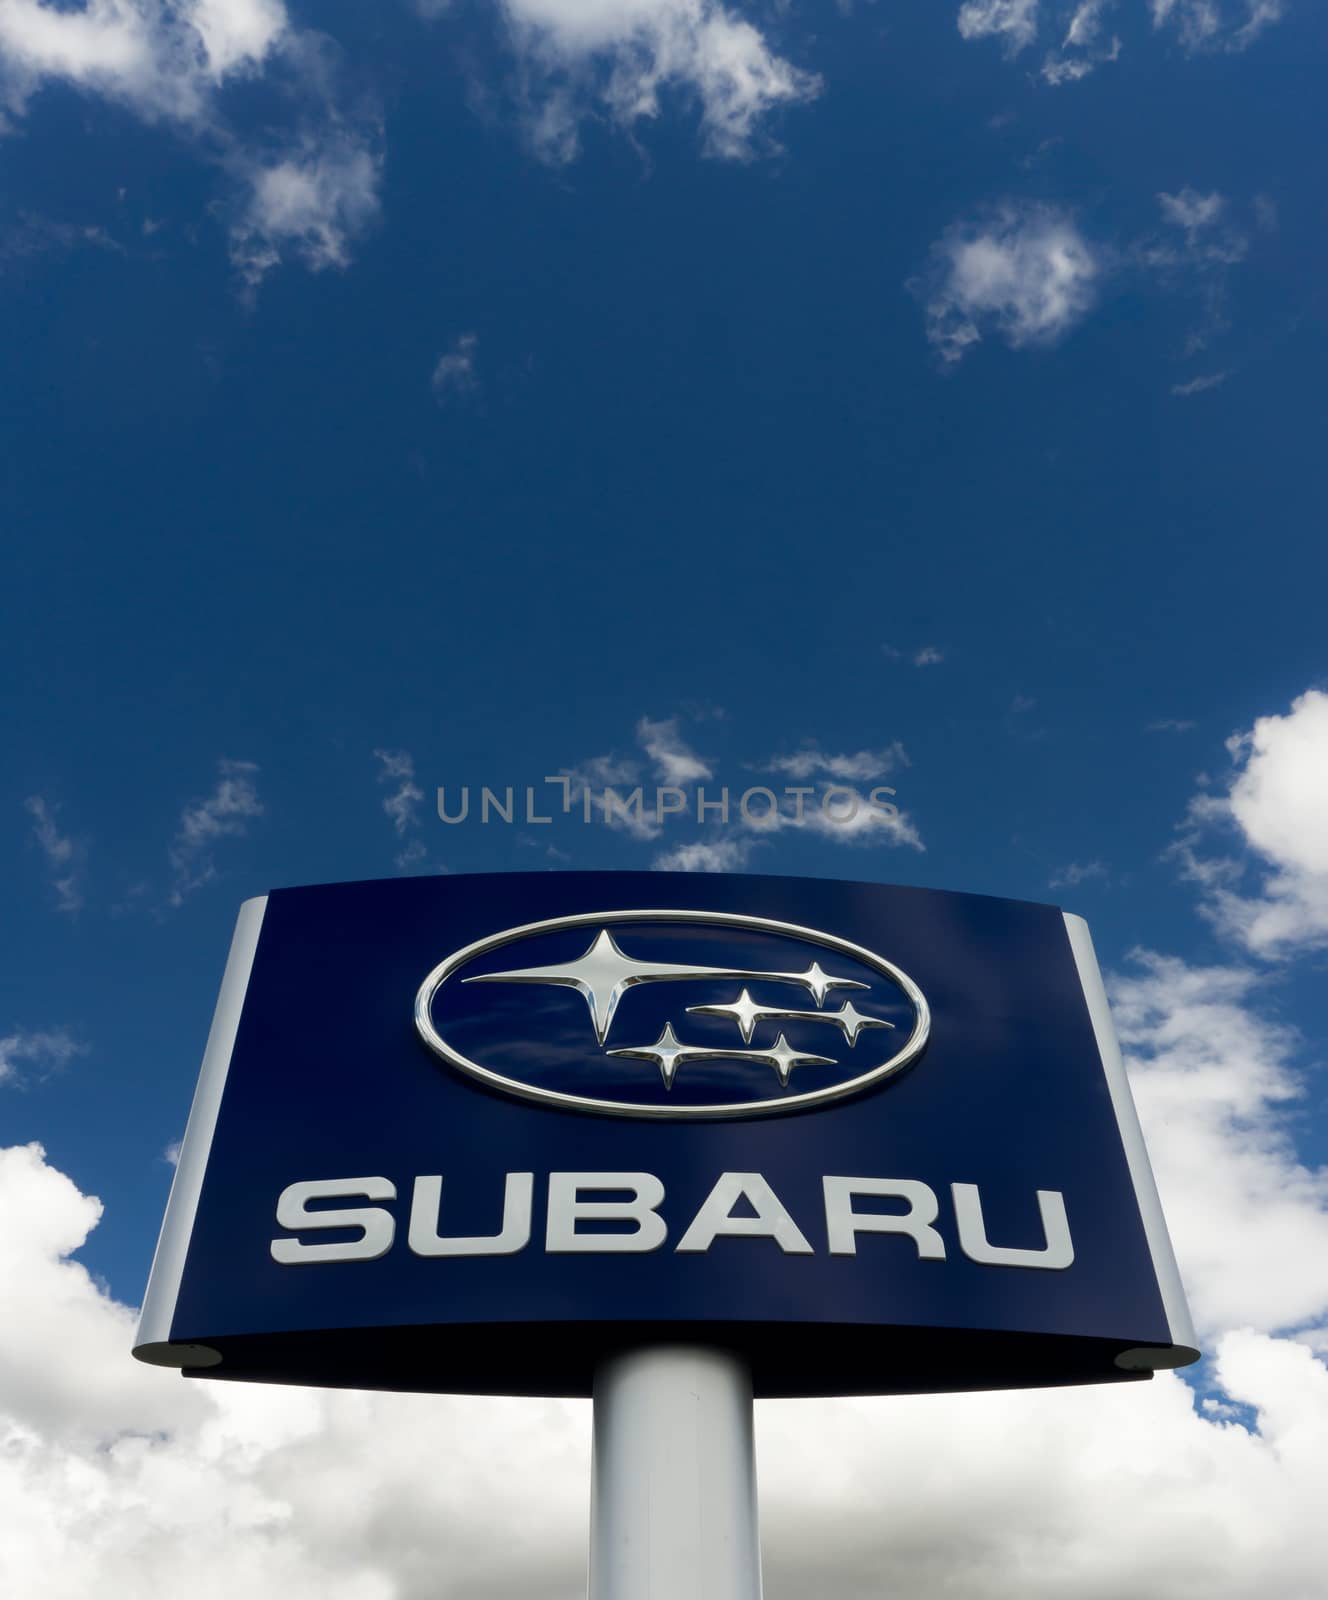 SANTA CLARITA, CA/USA - MARCH 1, 2015: Subaru automobile dealership and sign. Subaru is the automobile manufacturing division of Fuji Heavy Industries.